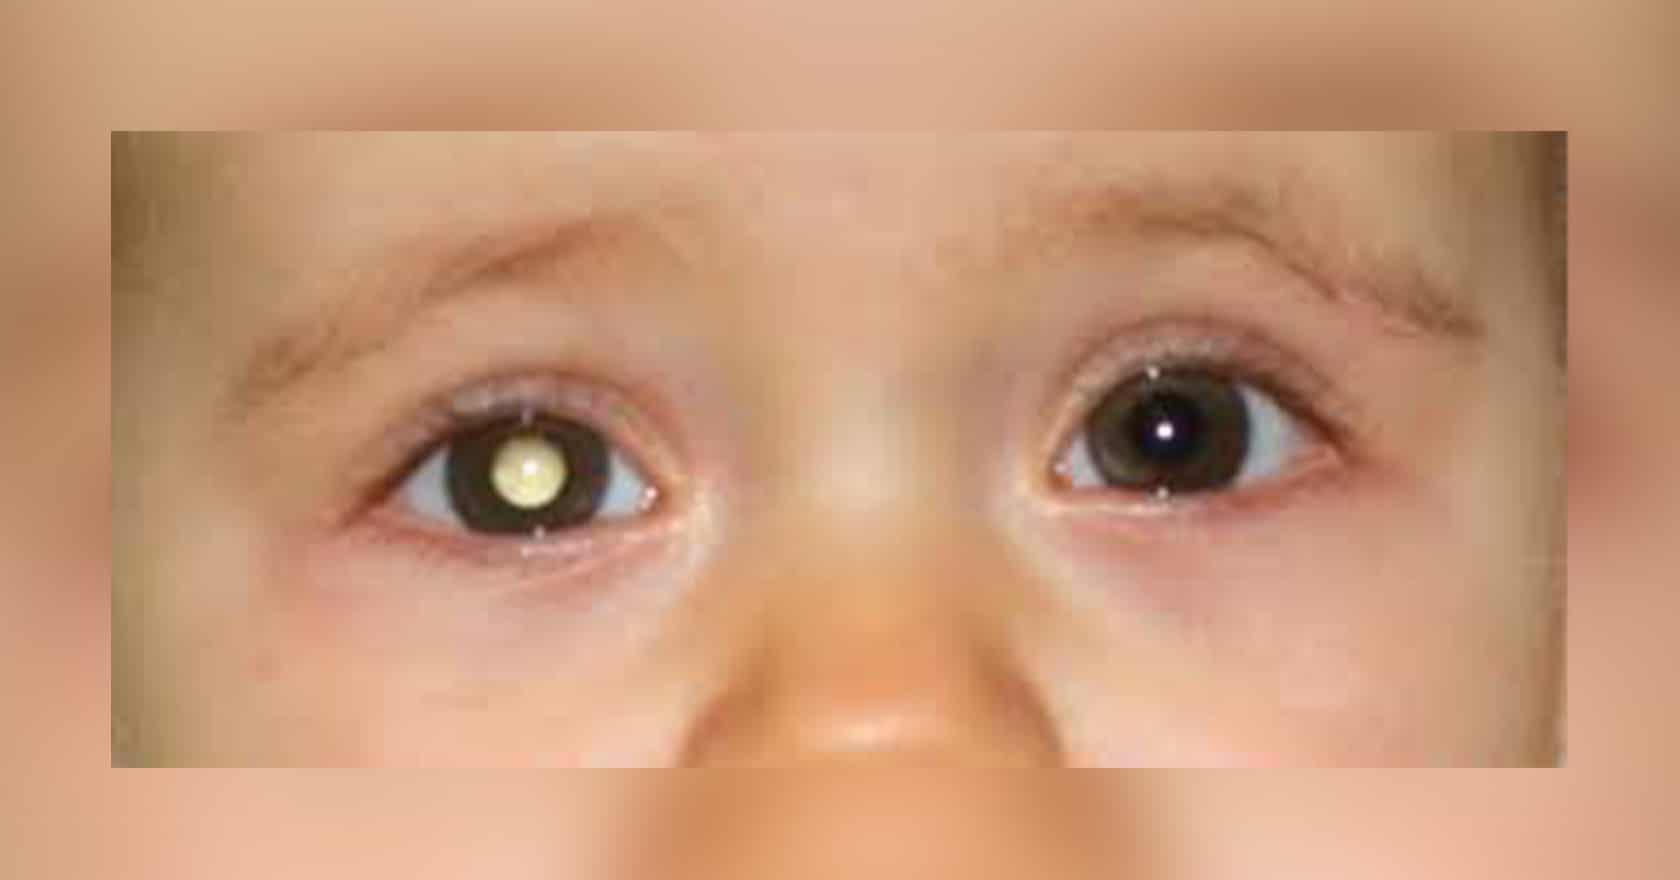 Cataracte congénitale : chirurgien ophtalmologue | opération cataracte | Dr Berthon | Lyon